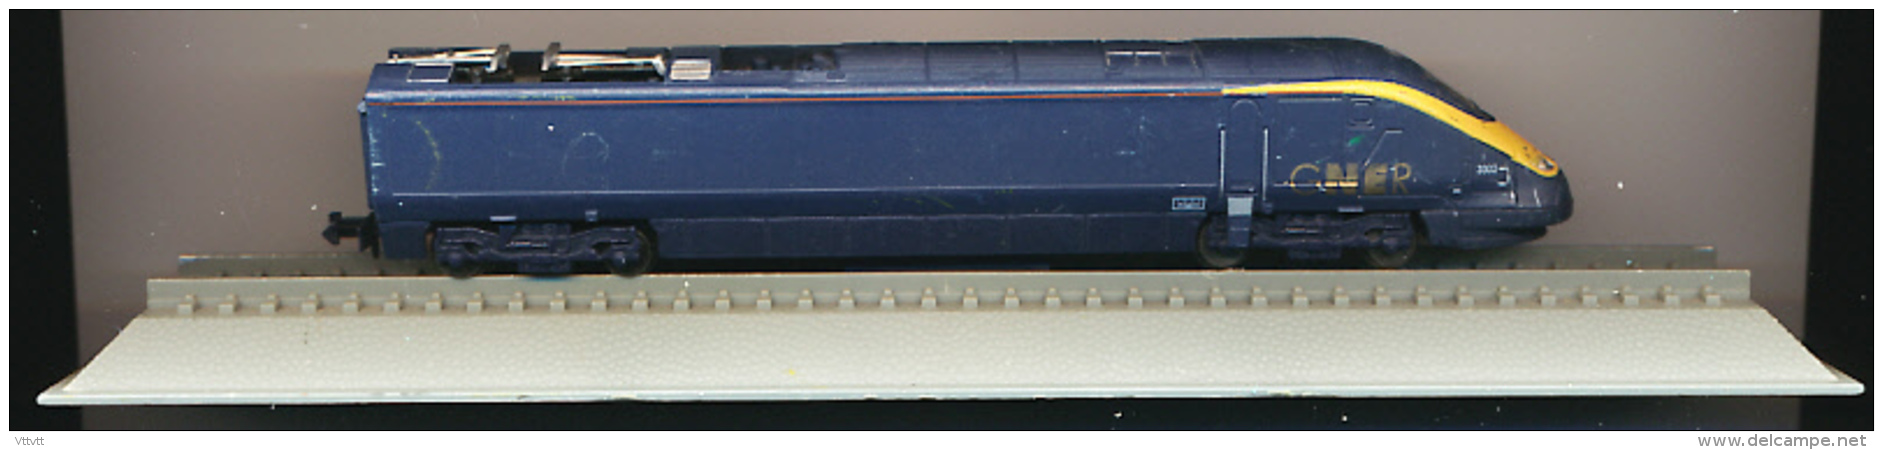 Locomotive : GNER Class 373 "White Rose", Echelle N 1/160, G = 9 Mm, United Kingdom, Grande-Bretagne - Locomotive